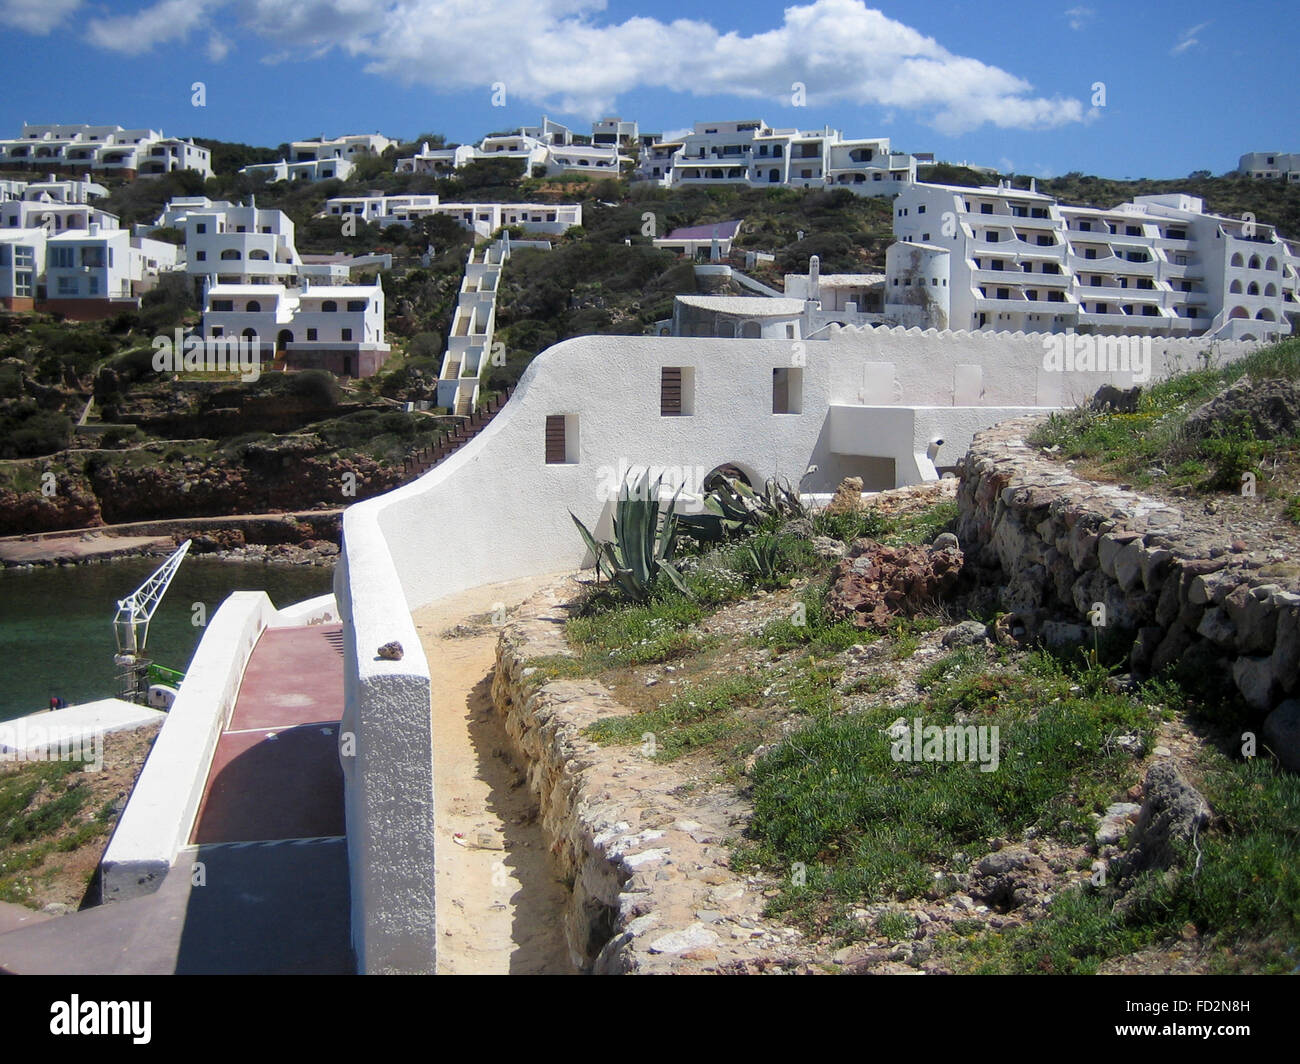 White houses in the bay Badia de Fornells, Fornells, Minorca, Menorca, Balearic Islands, Mediterranean Sea, Spain, Europe Stock Photo